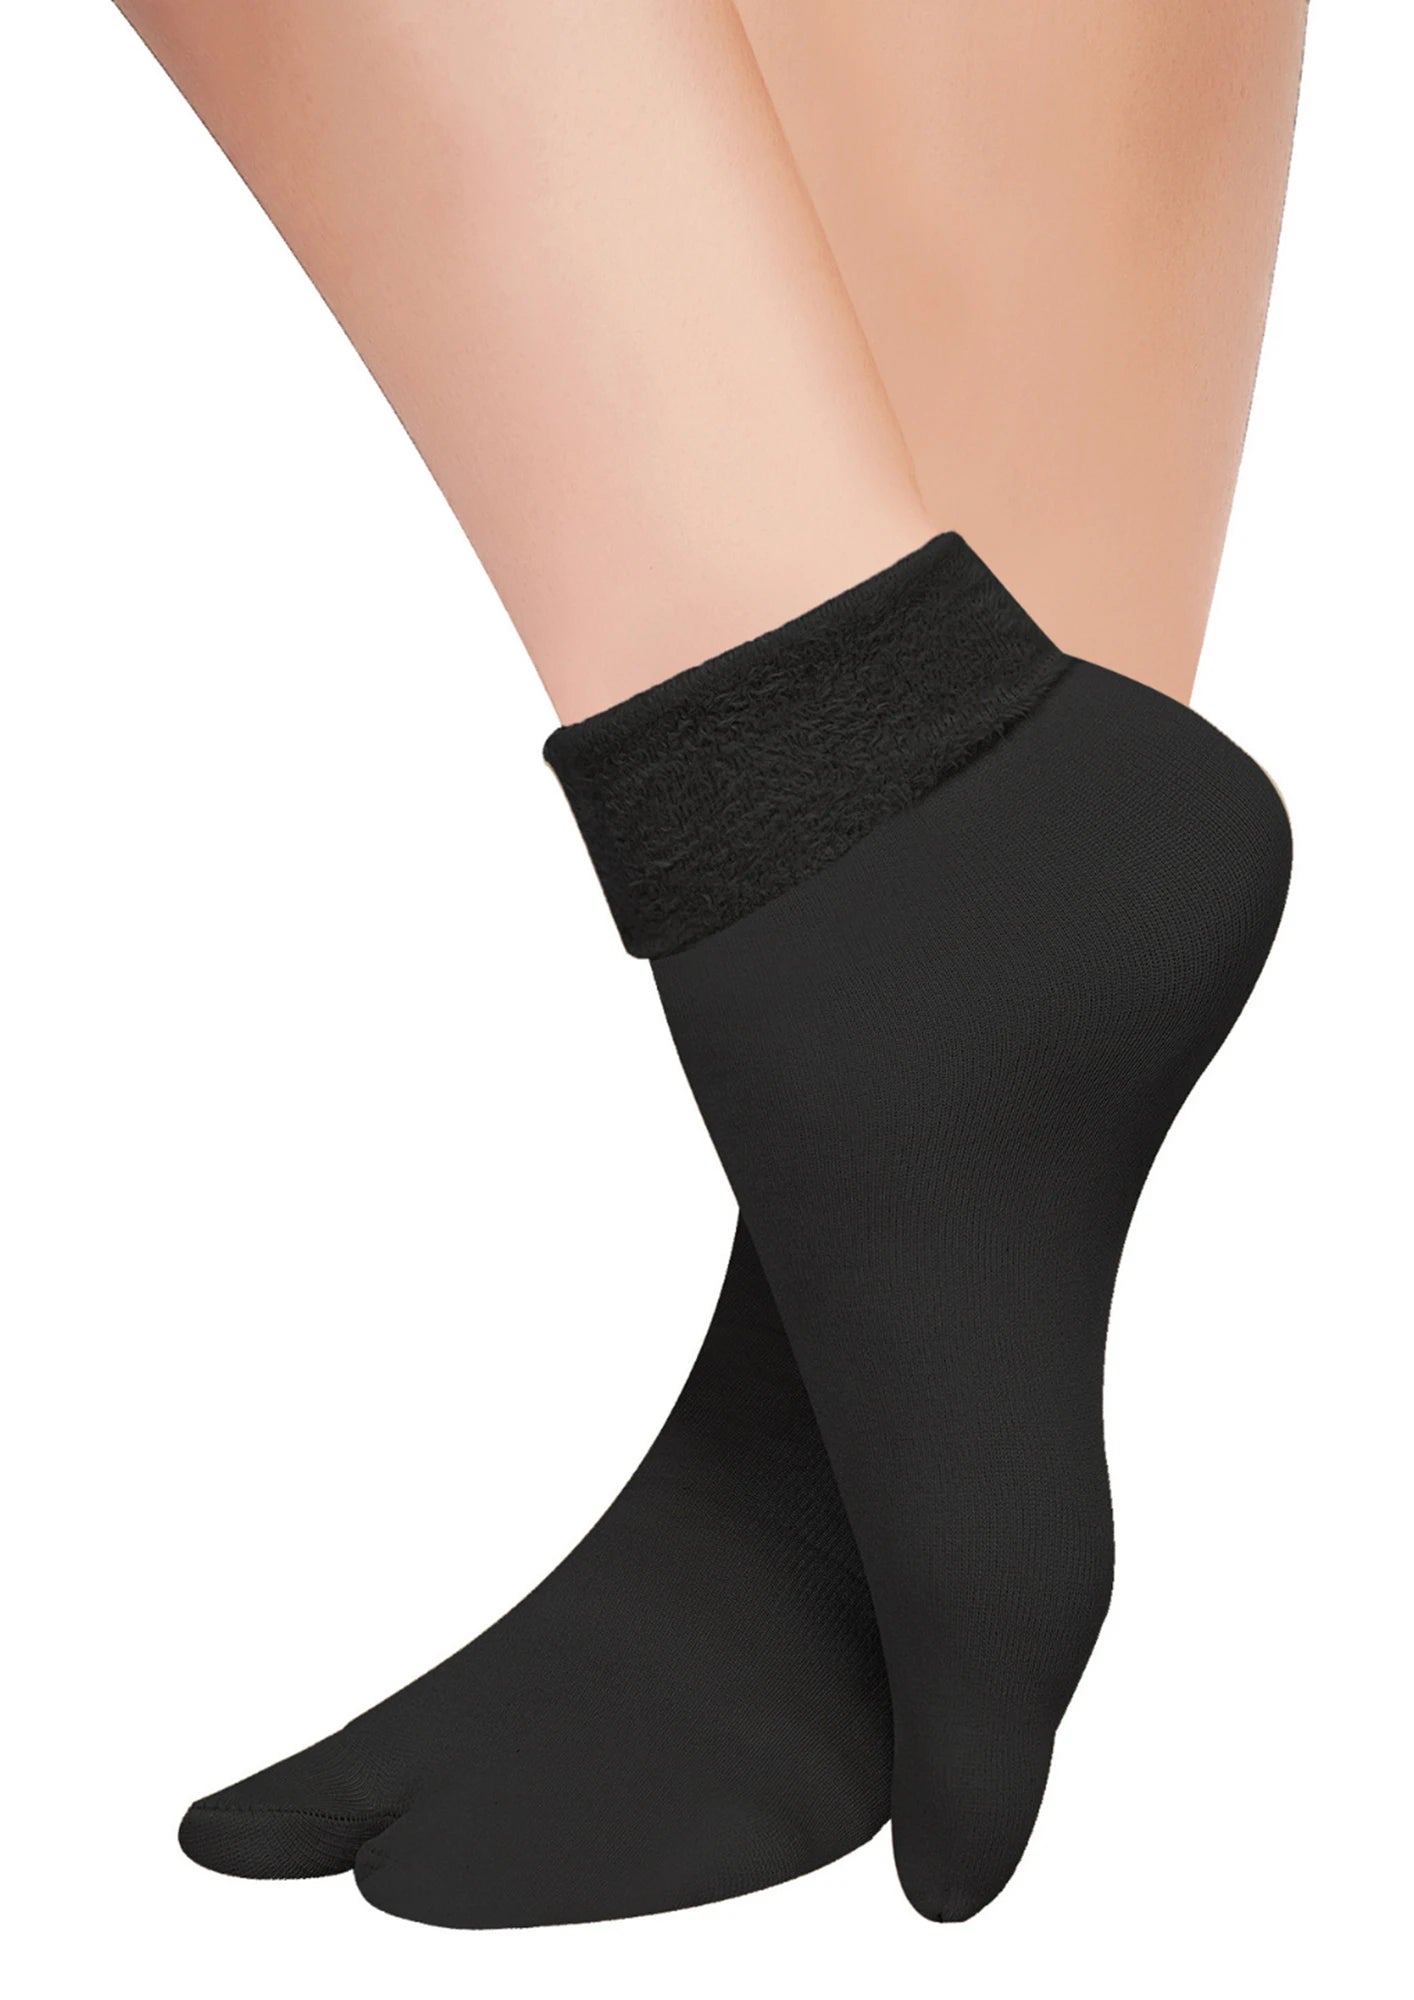 Thumb Winter Warm Socks, Ankle Length Fur Socks, Winter Hot Warm Socks, Insulated Thermal Thumb Socks, Thick Cozy Socks for Women's and Girls, Woolen Fleece Fur Socks